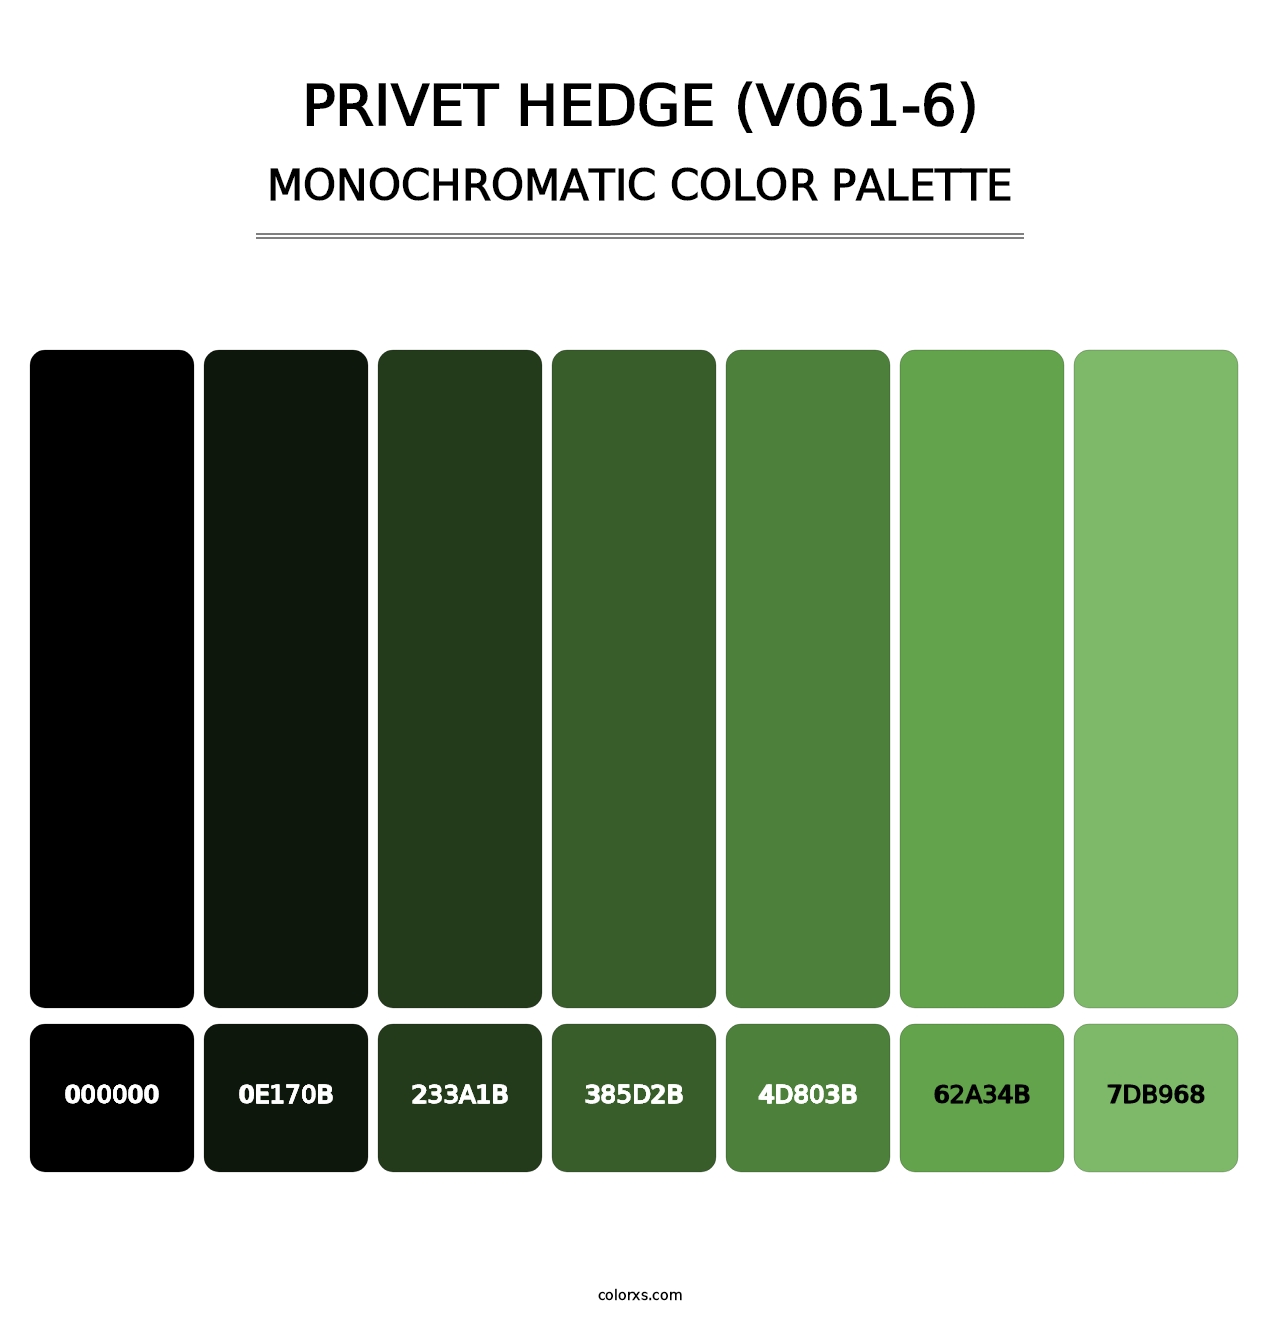 Privet Hedge (V061-6) - Monochromatic Color Palette